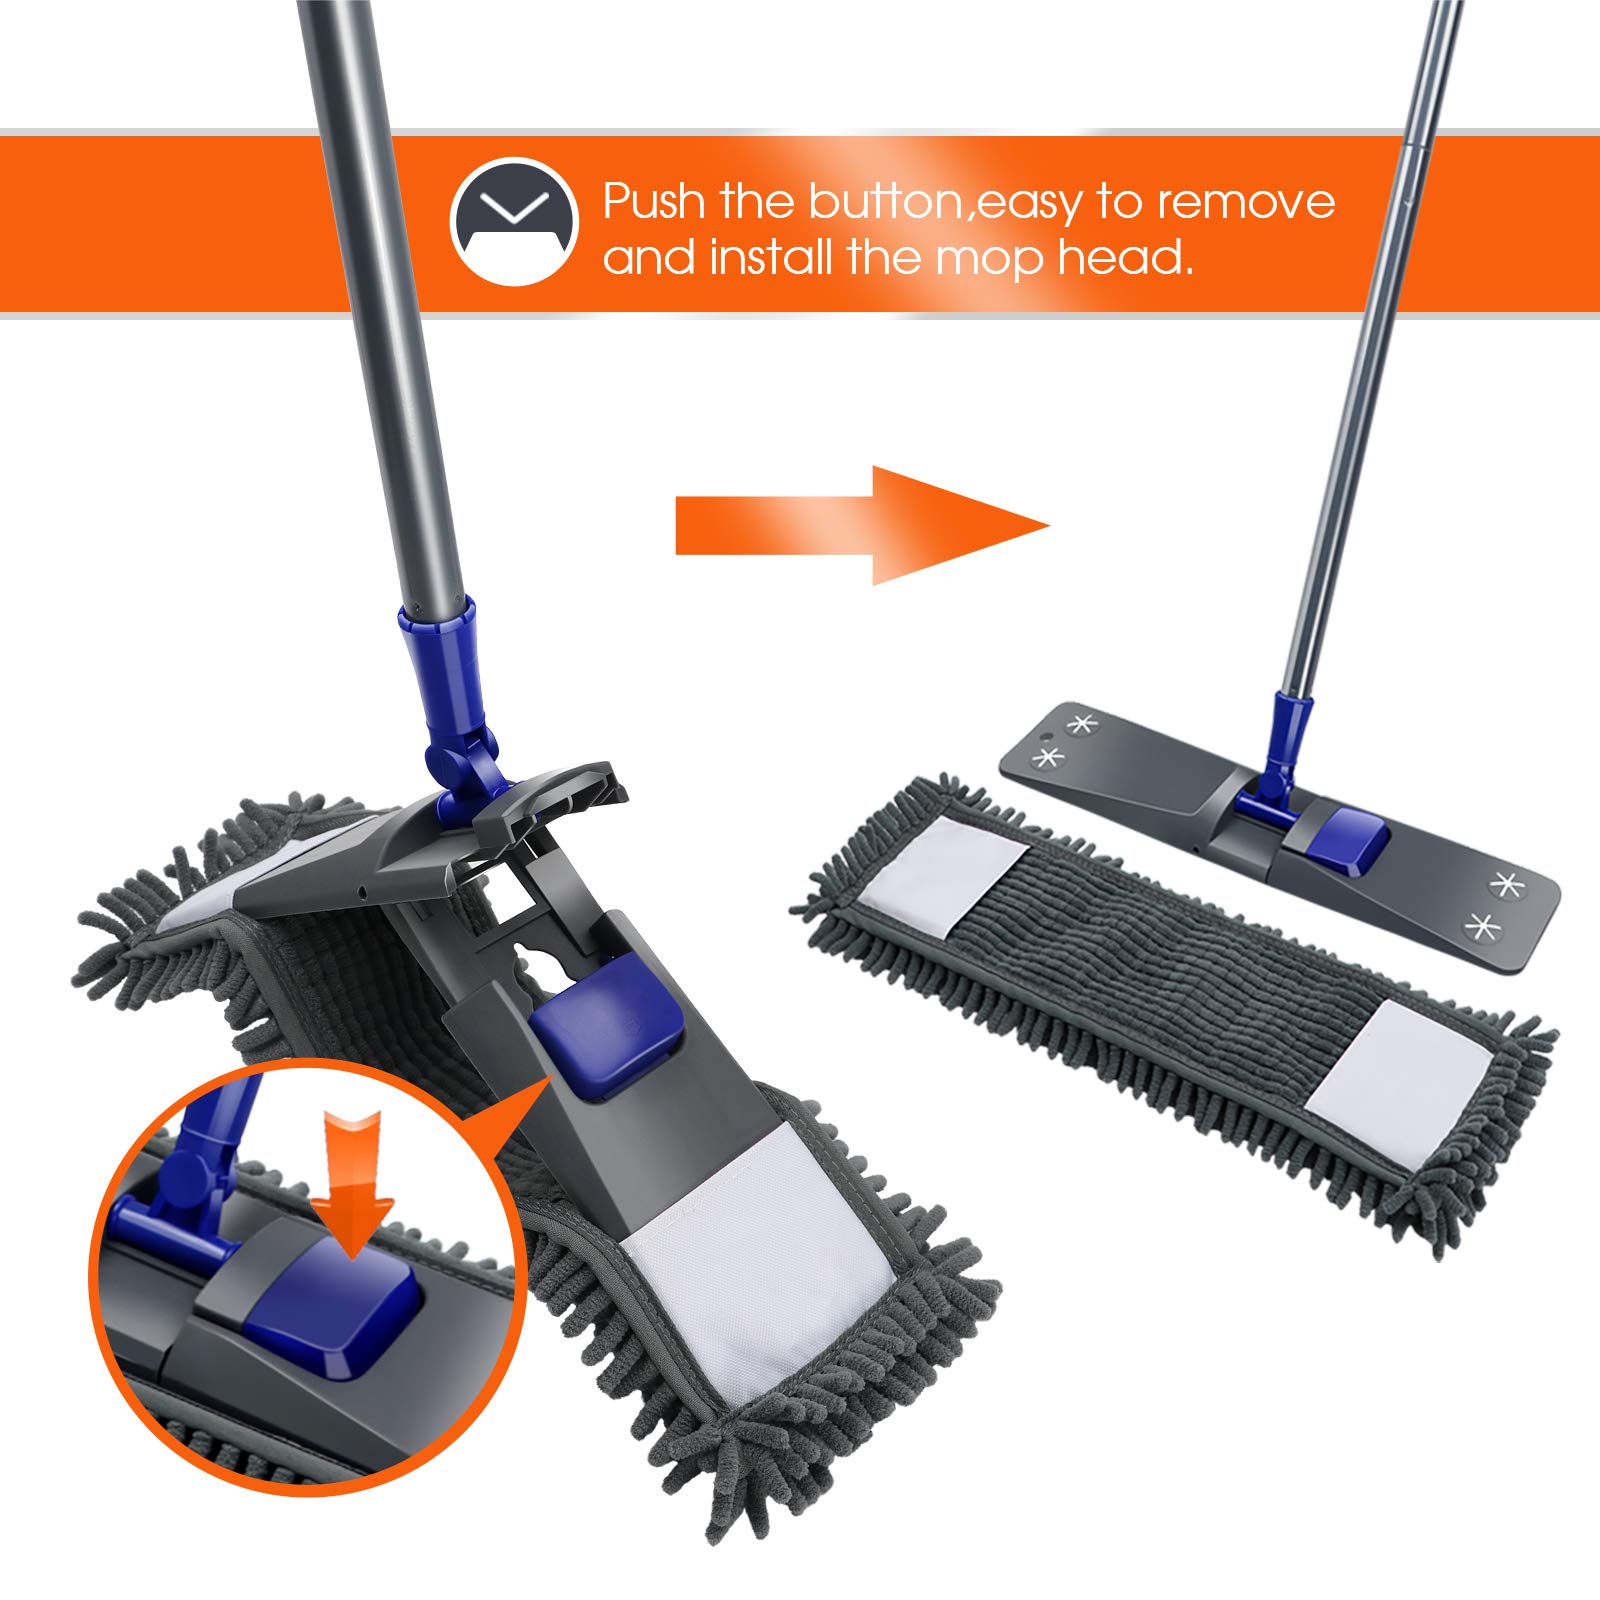 MASTERTOP Professional Microfiber Mop - Microfiber Sweeper Dust Mop,Wet & Dry Floor Cleaning Mop, 4 Replaceable Washable Mop Pads, Extendable Handle, Flat Magic Mop for Hardwood, Tiles, Laminate